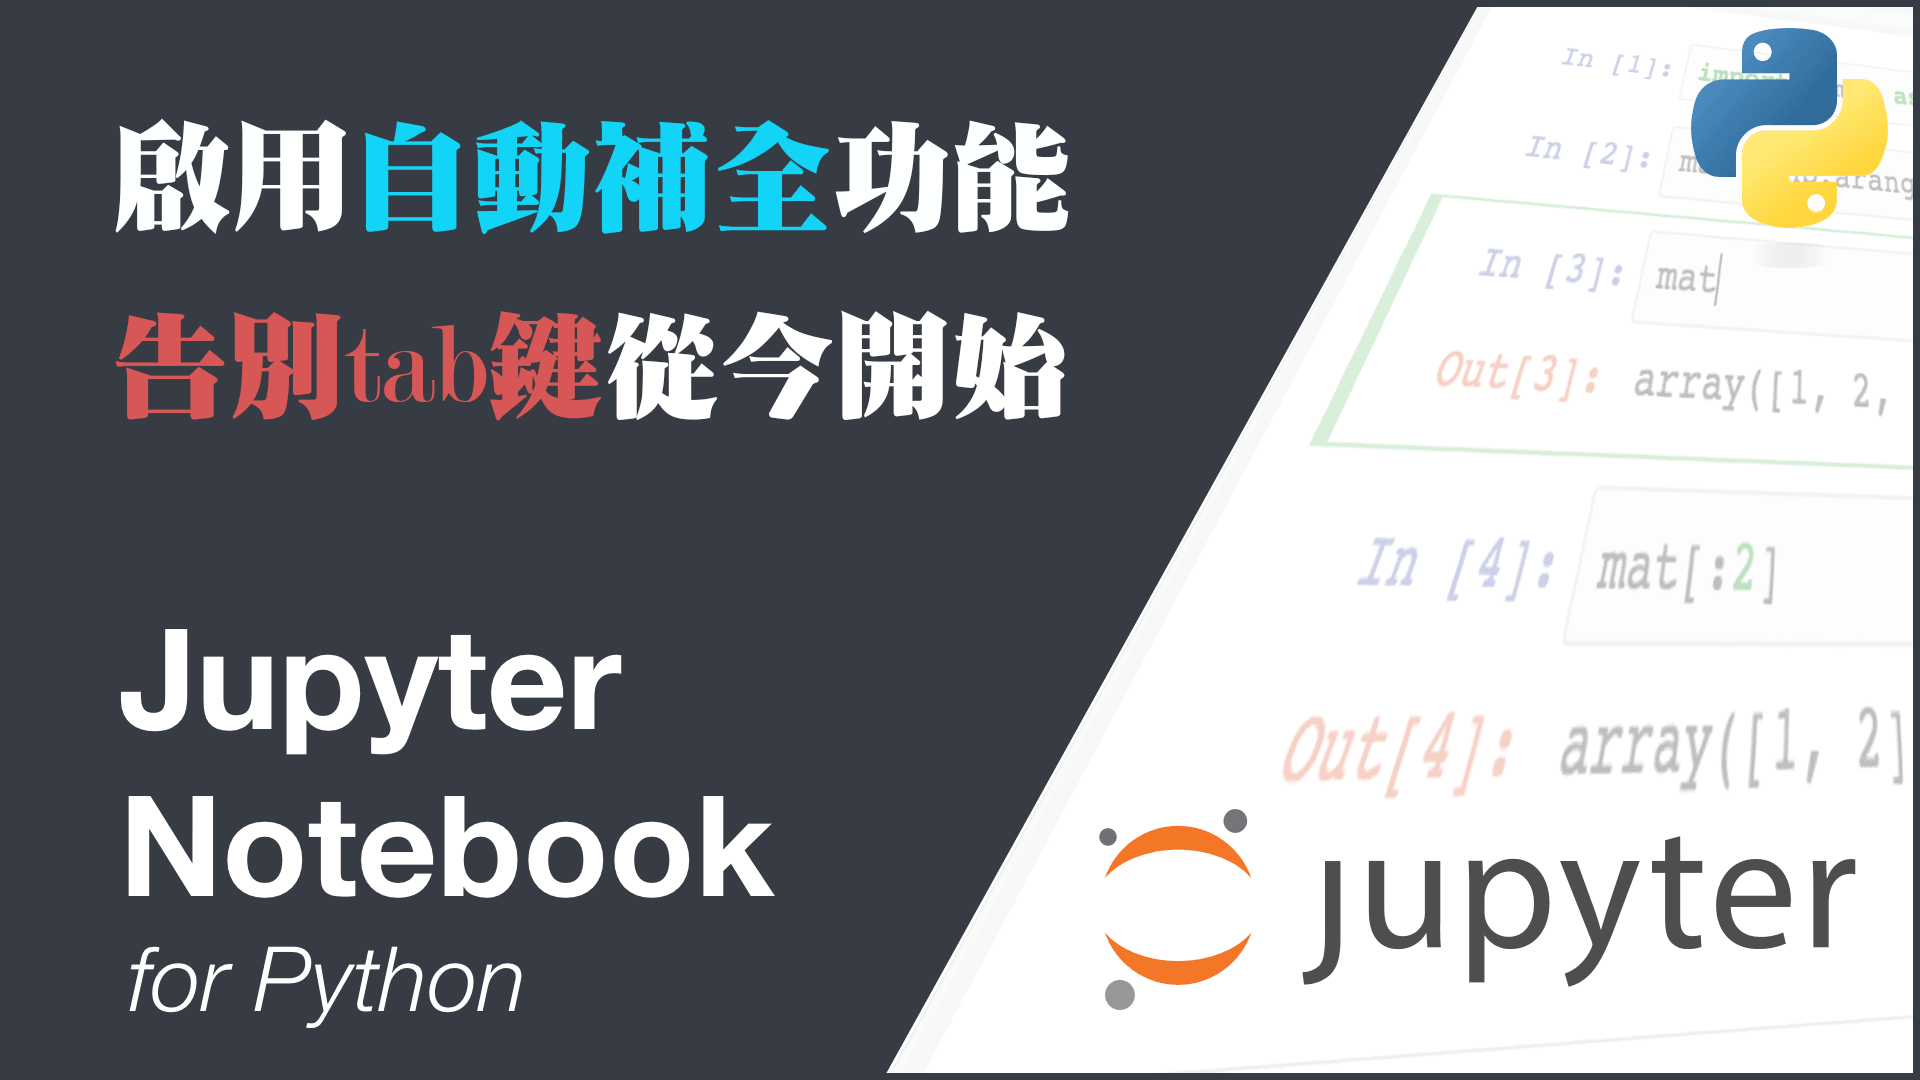 Jupyter Notebook 啟用自動補全、自動完成函數名稱，不用再按tab了！